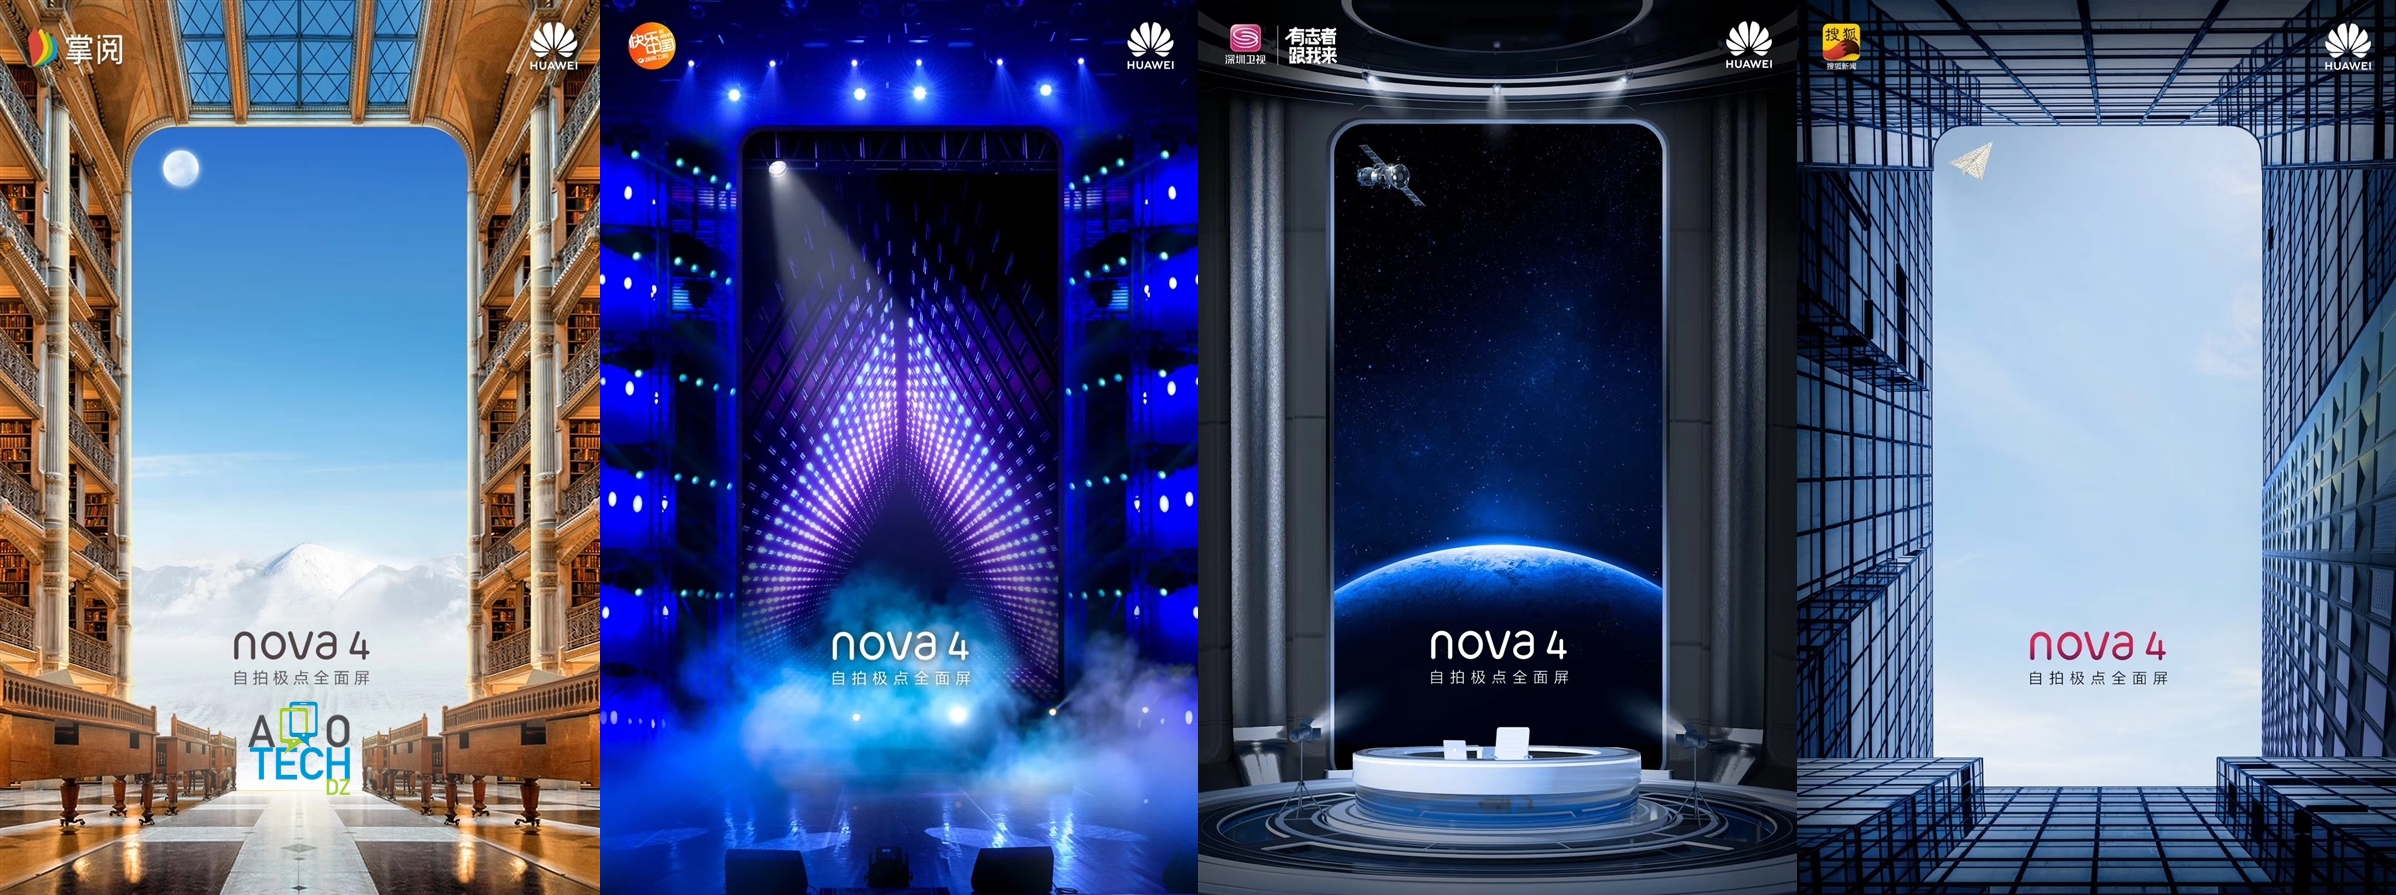 huawei-nova-4-presentation-chaines-satellite-TV